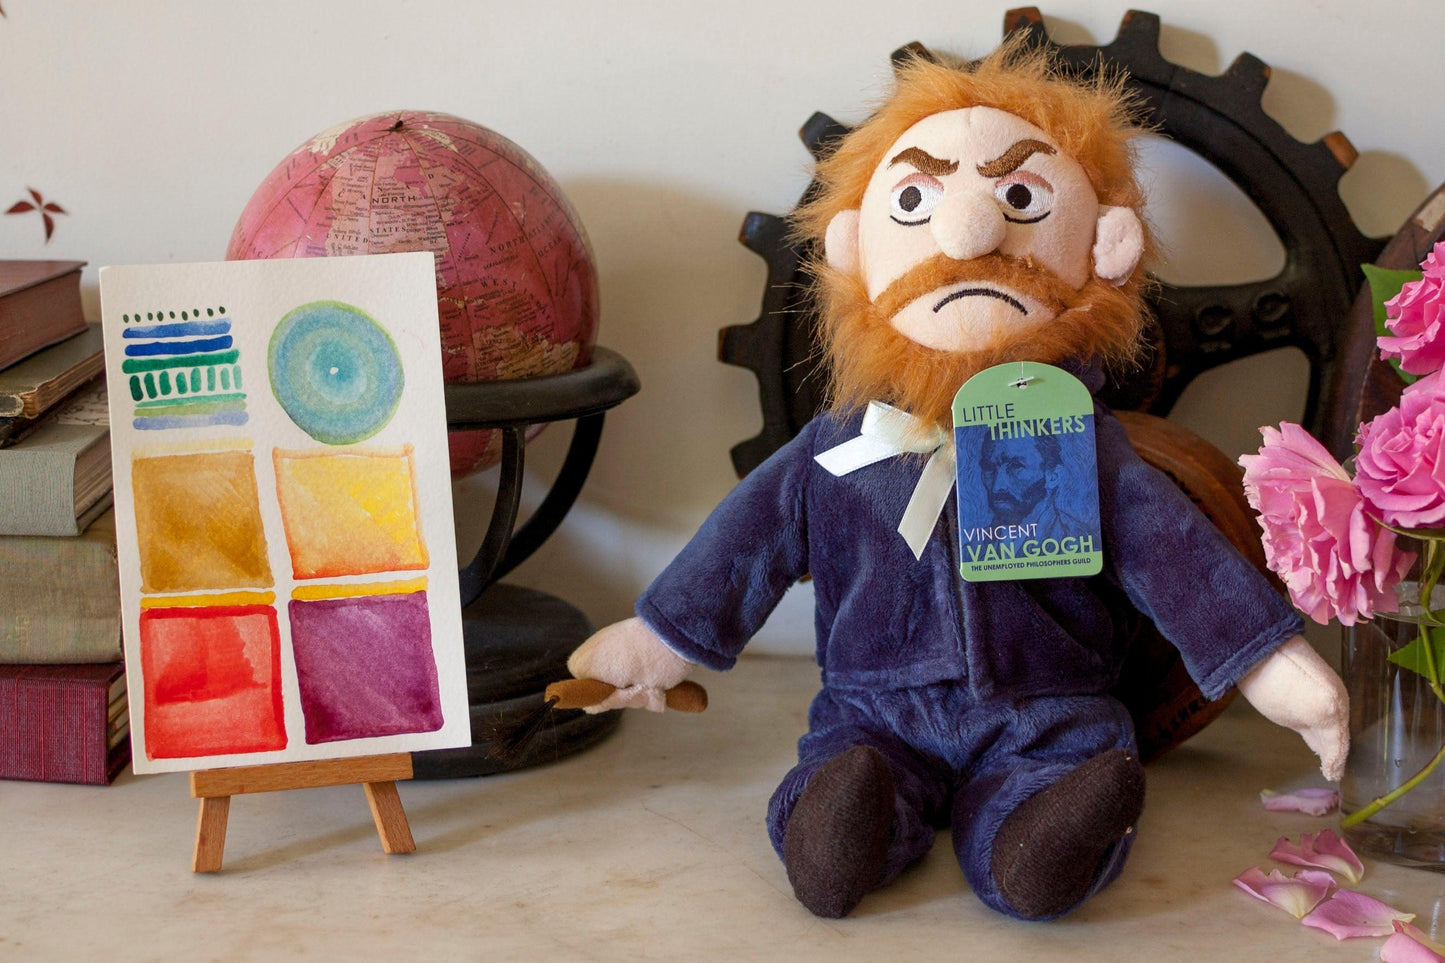 Vincent van Gogh "Little Thinker" Plush Doll